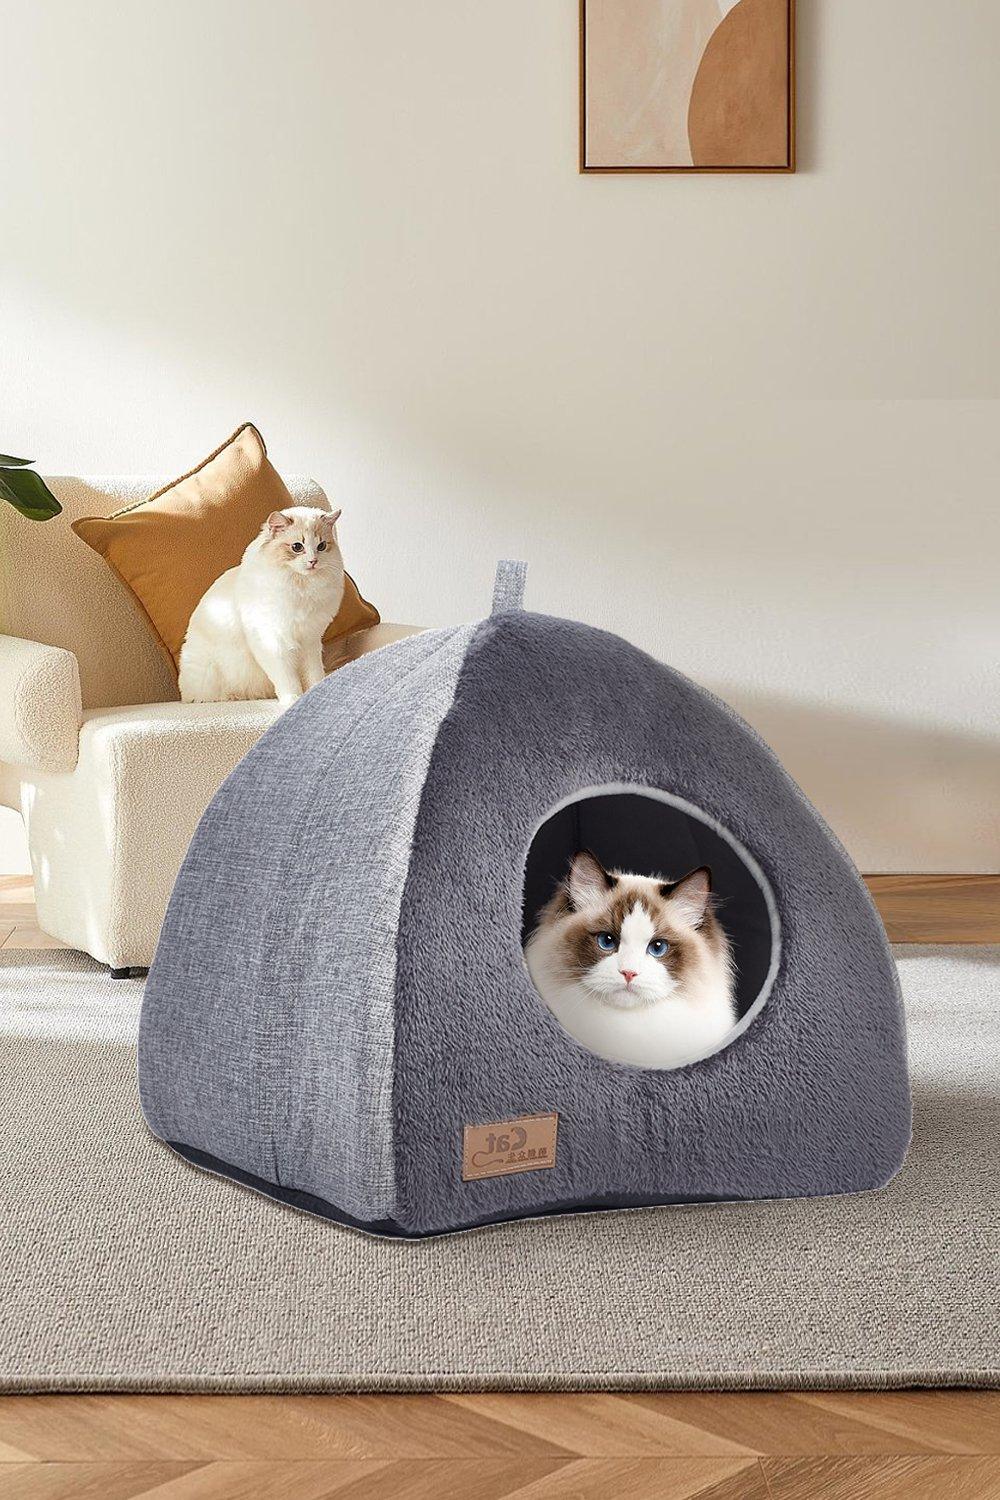 Triangular Dog Cat House with Soft Plush